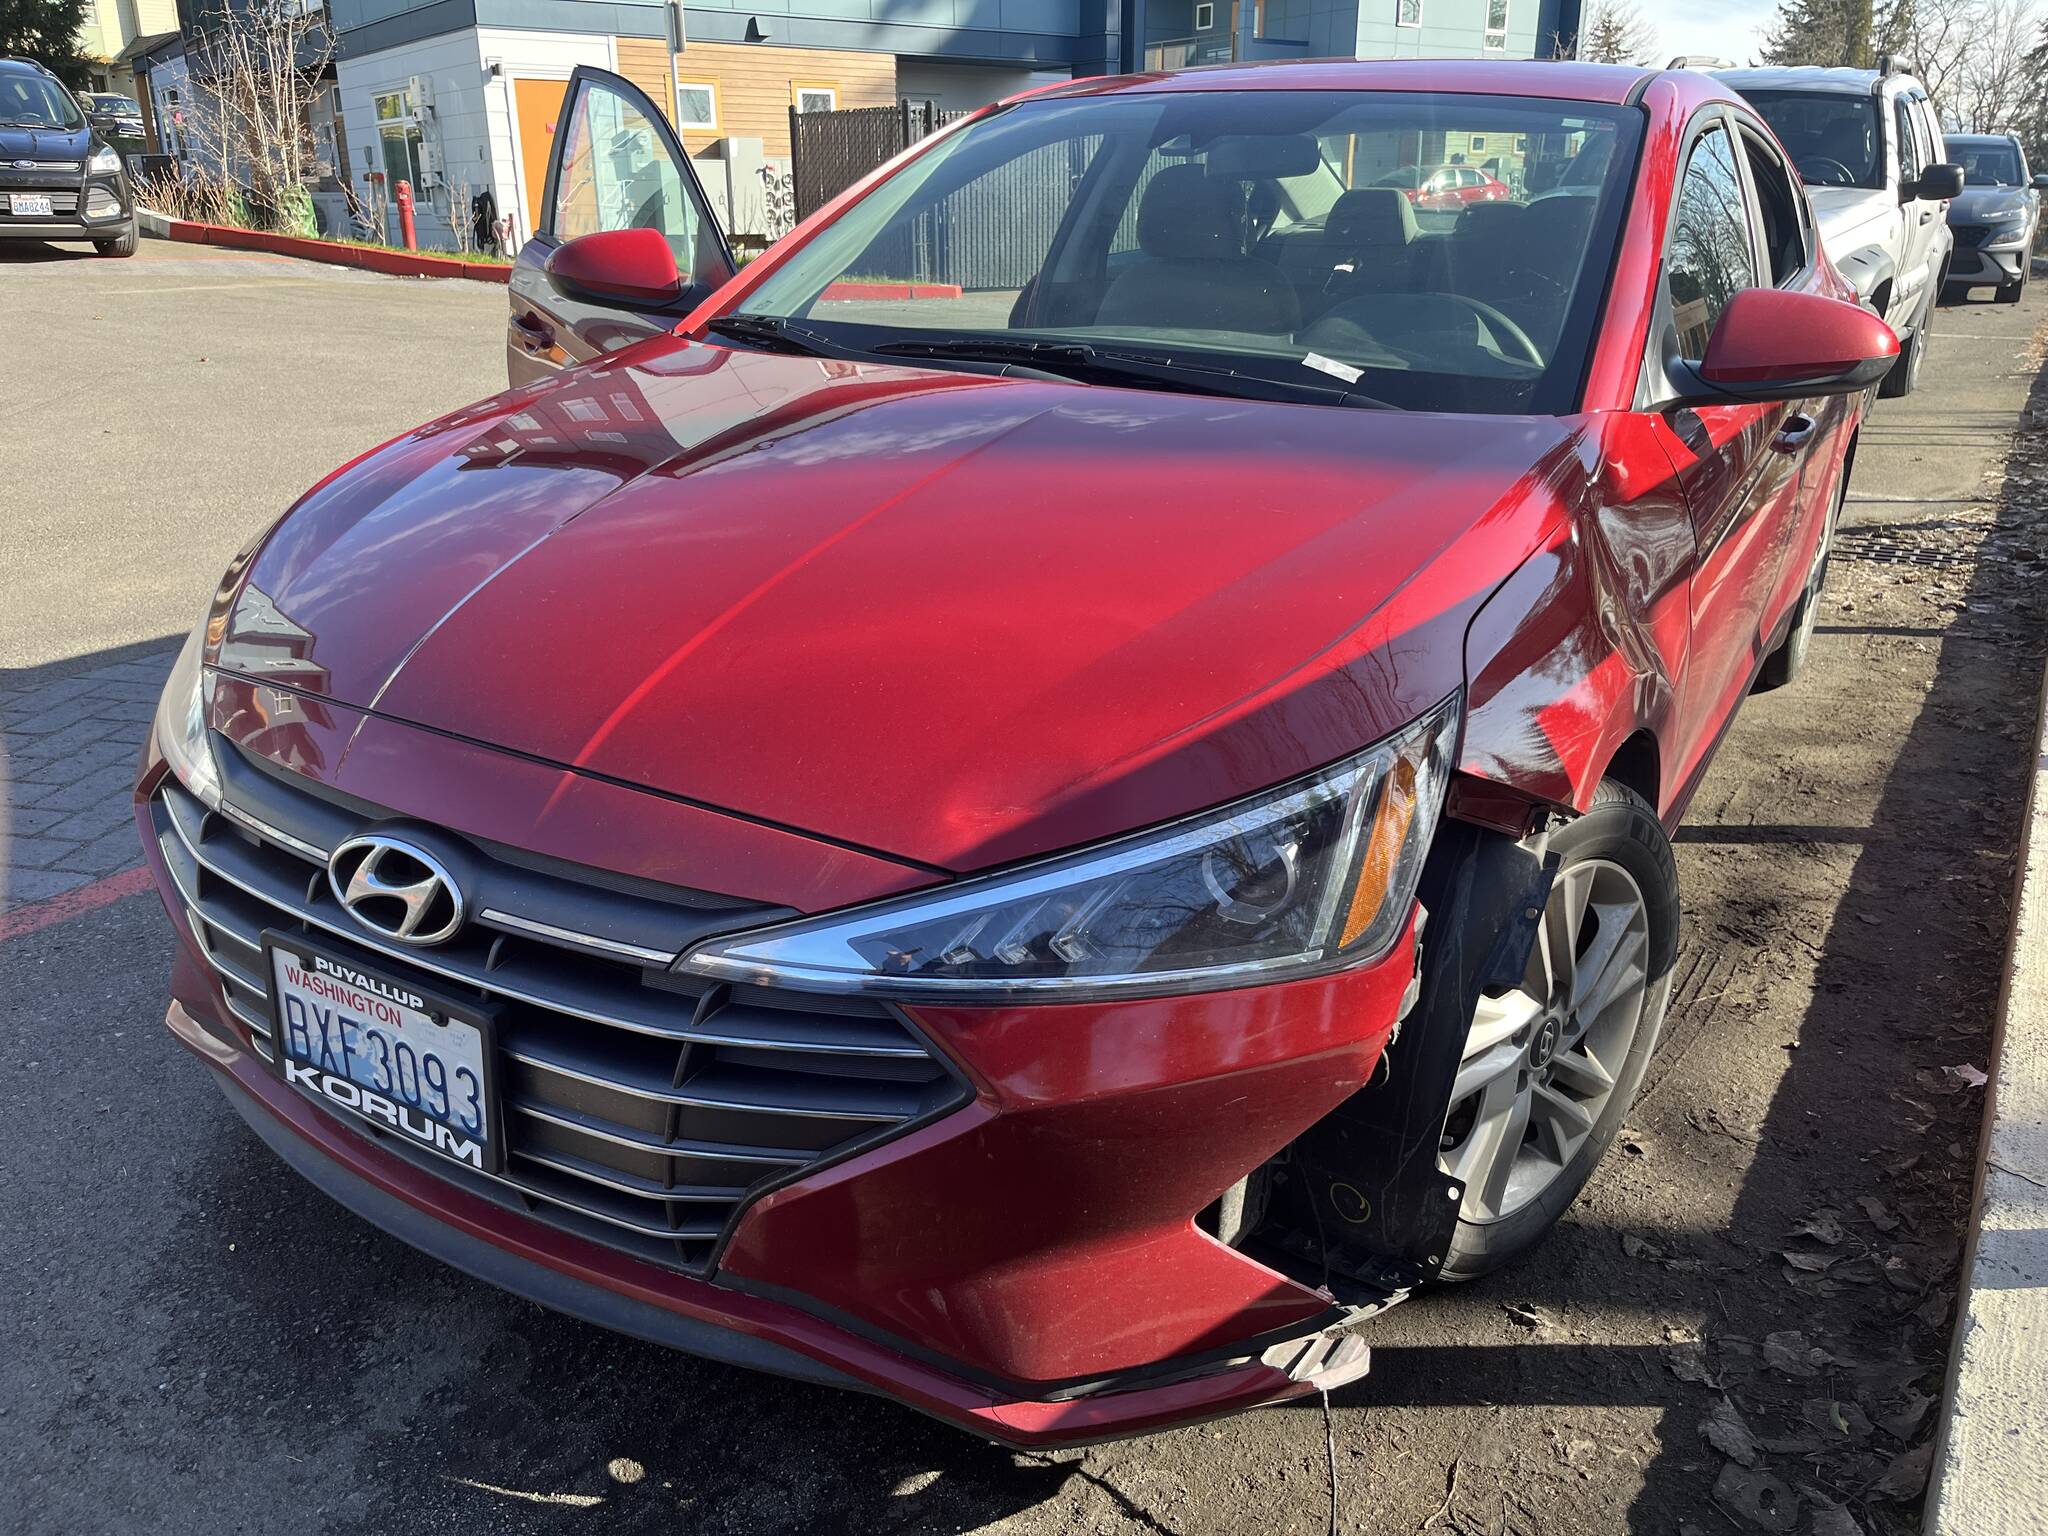 Damage to the 2019 Hyundai Elantra. (Photo by Ben Leung/Renton Reporter)